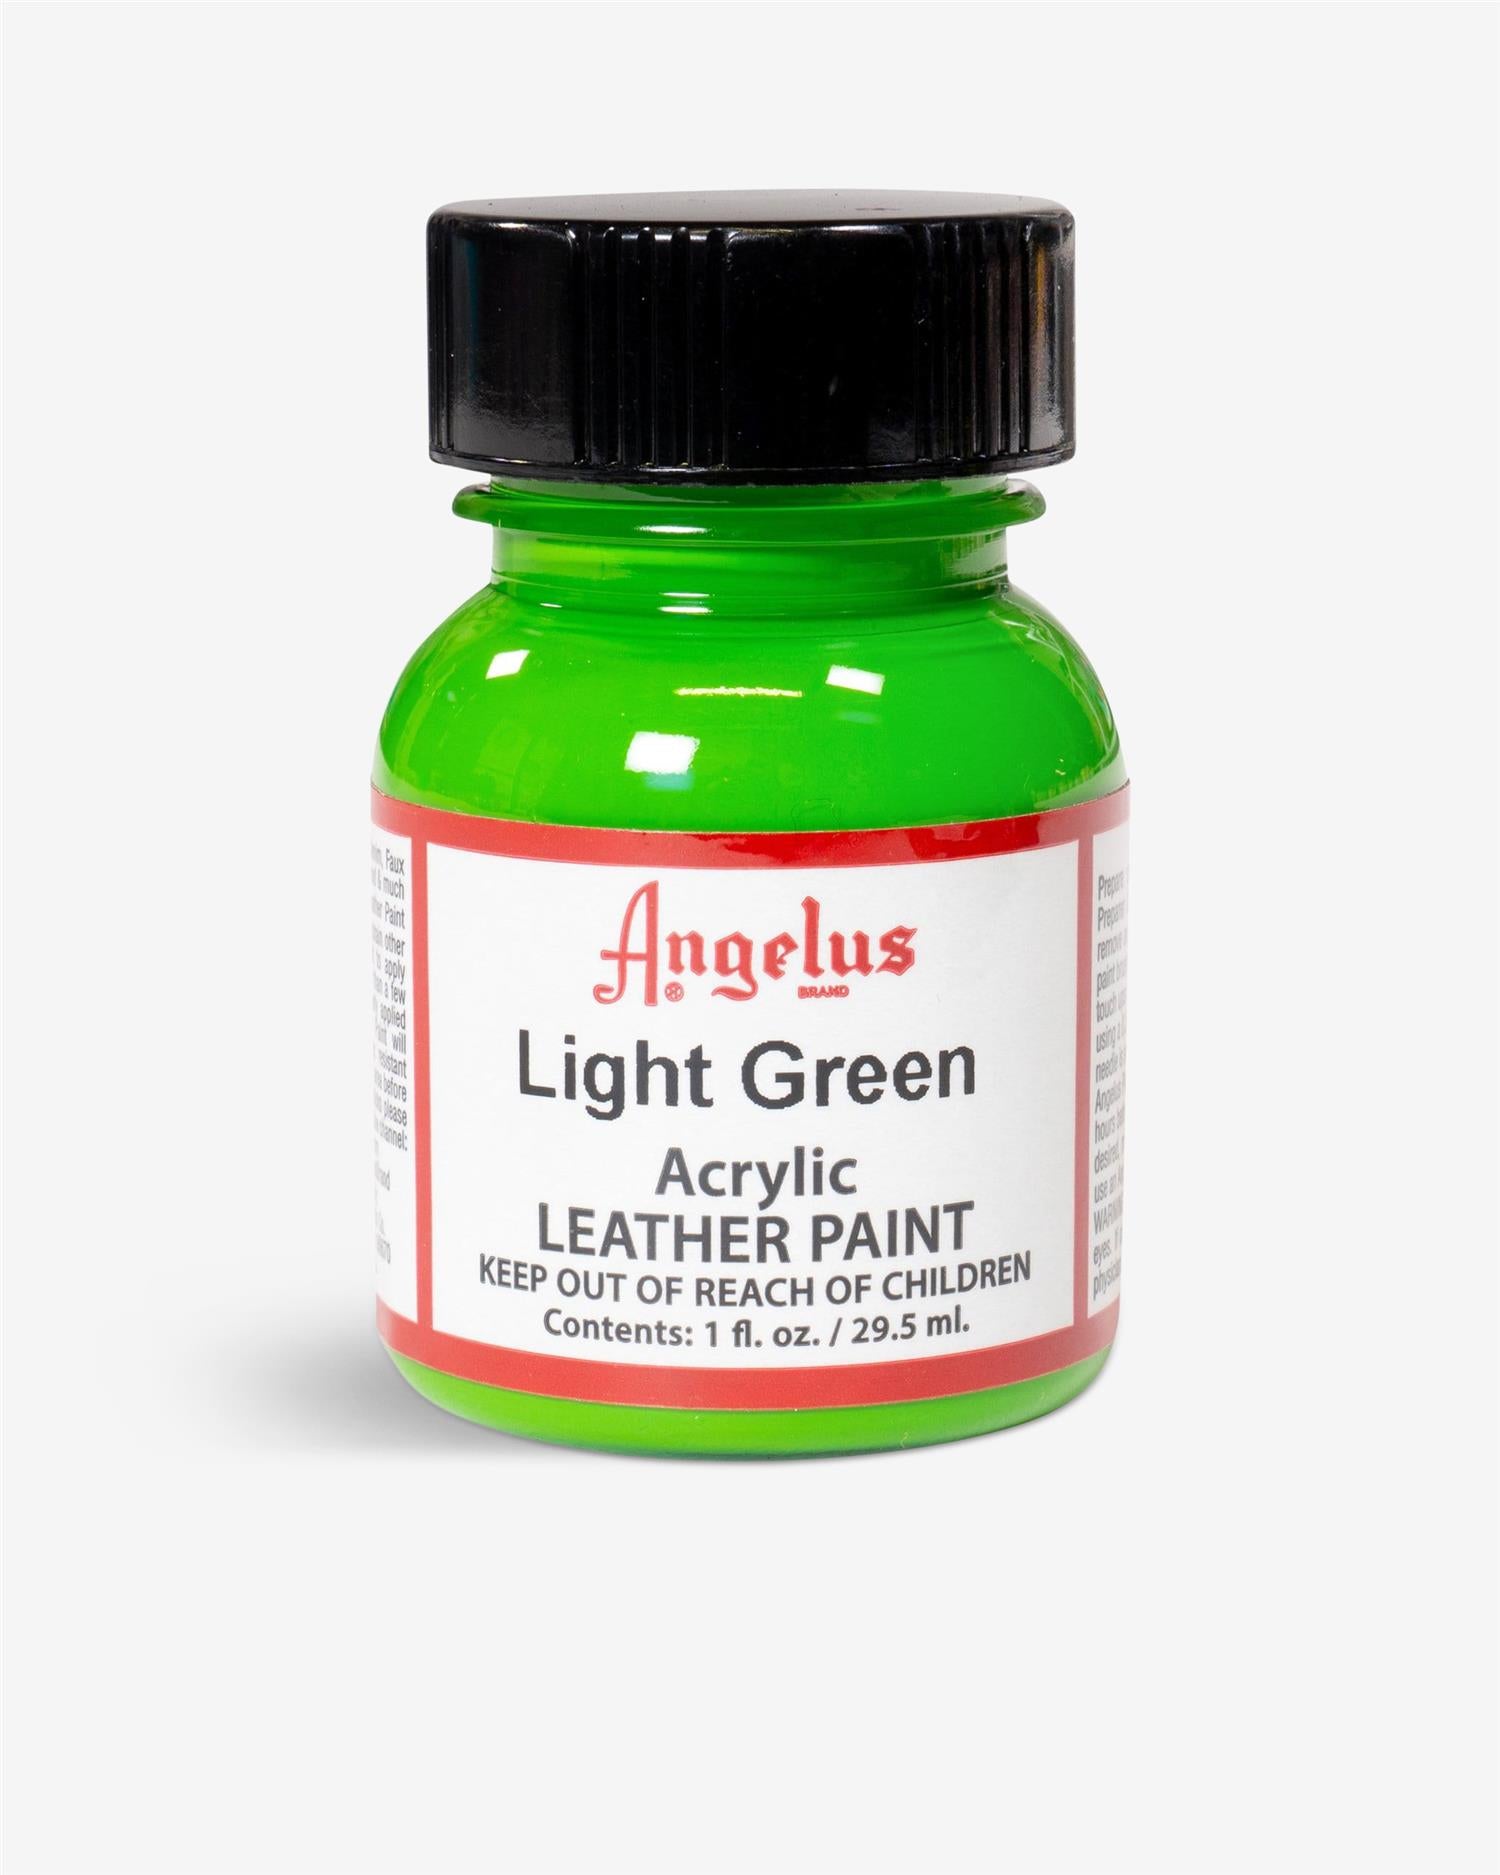 ACRYLIC LEATHER PAINT - LIGHT GREEN